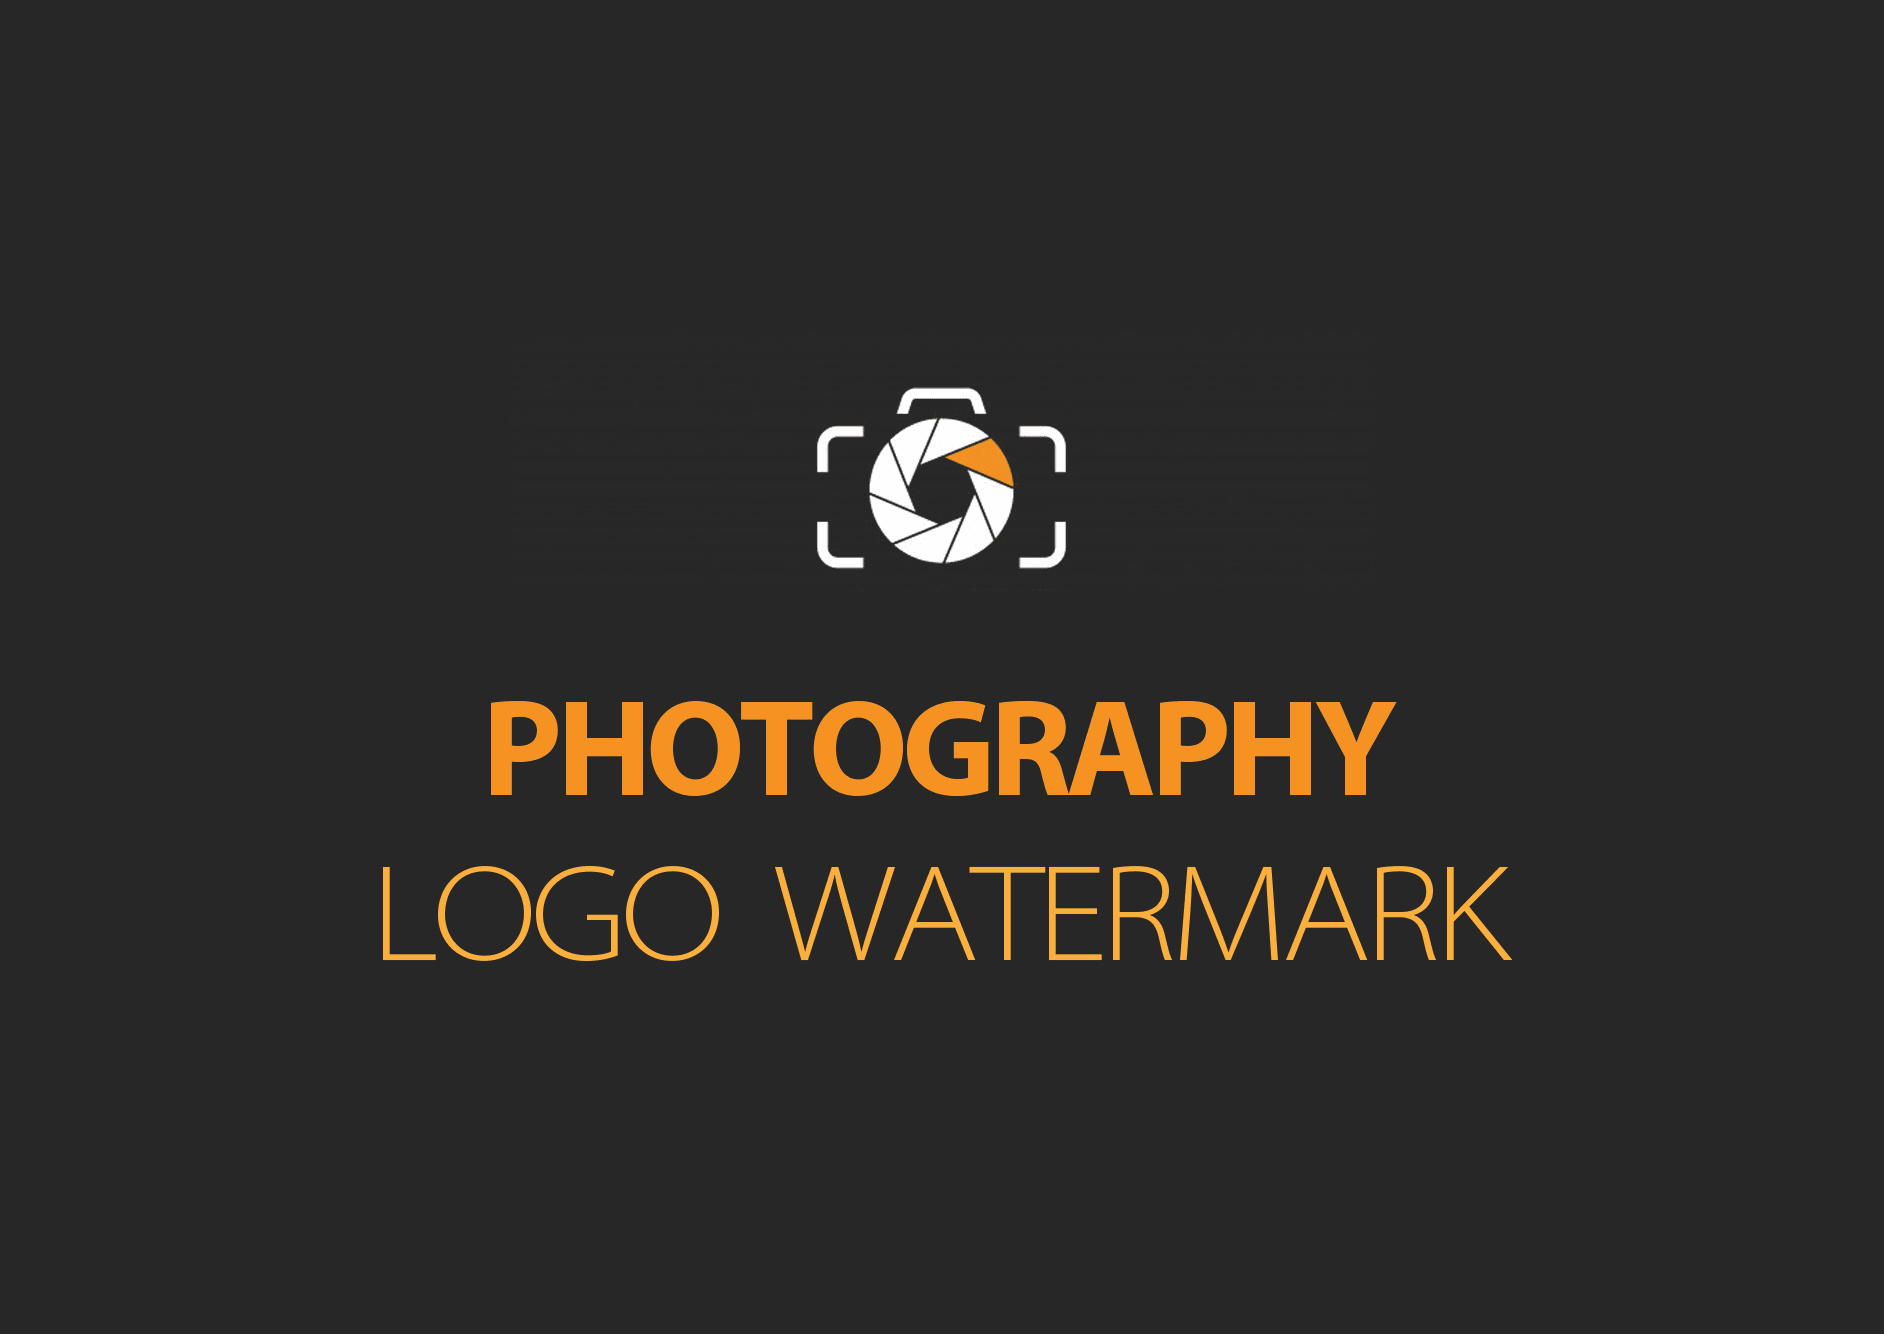 Design Photography Logo Watermark By Creatiflogos Fiverr